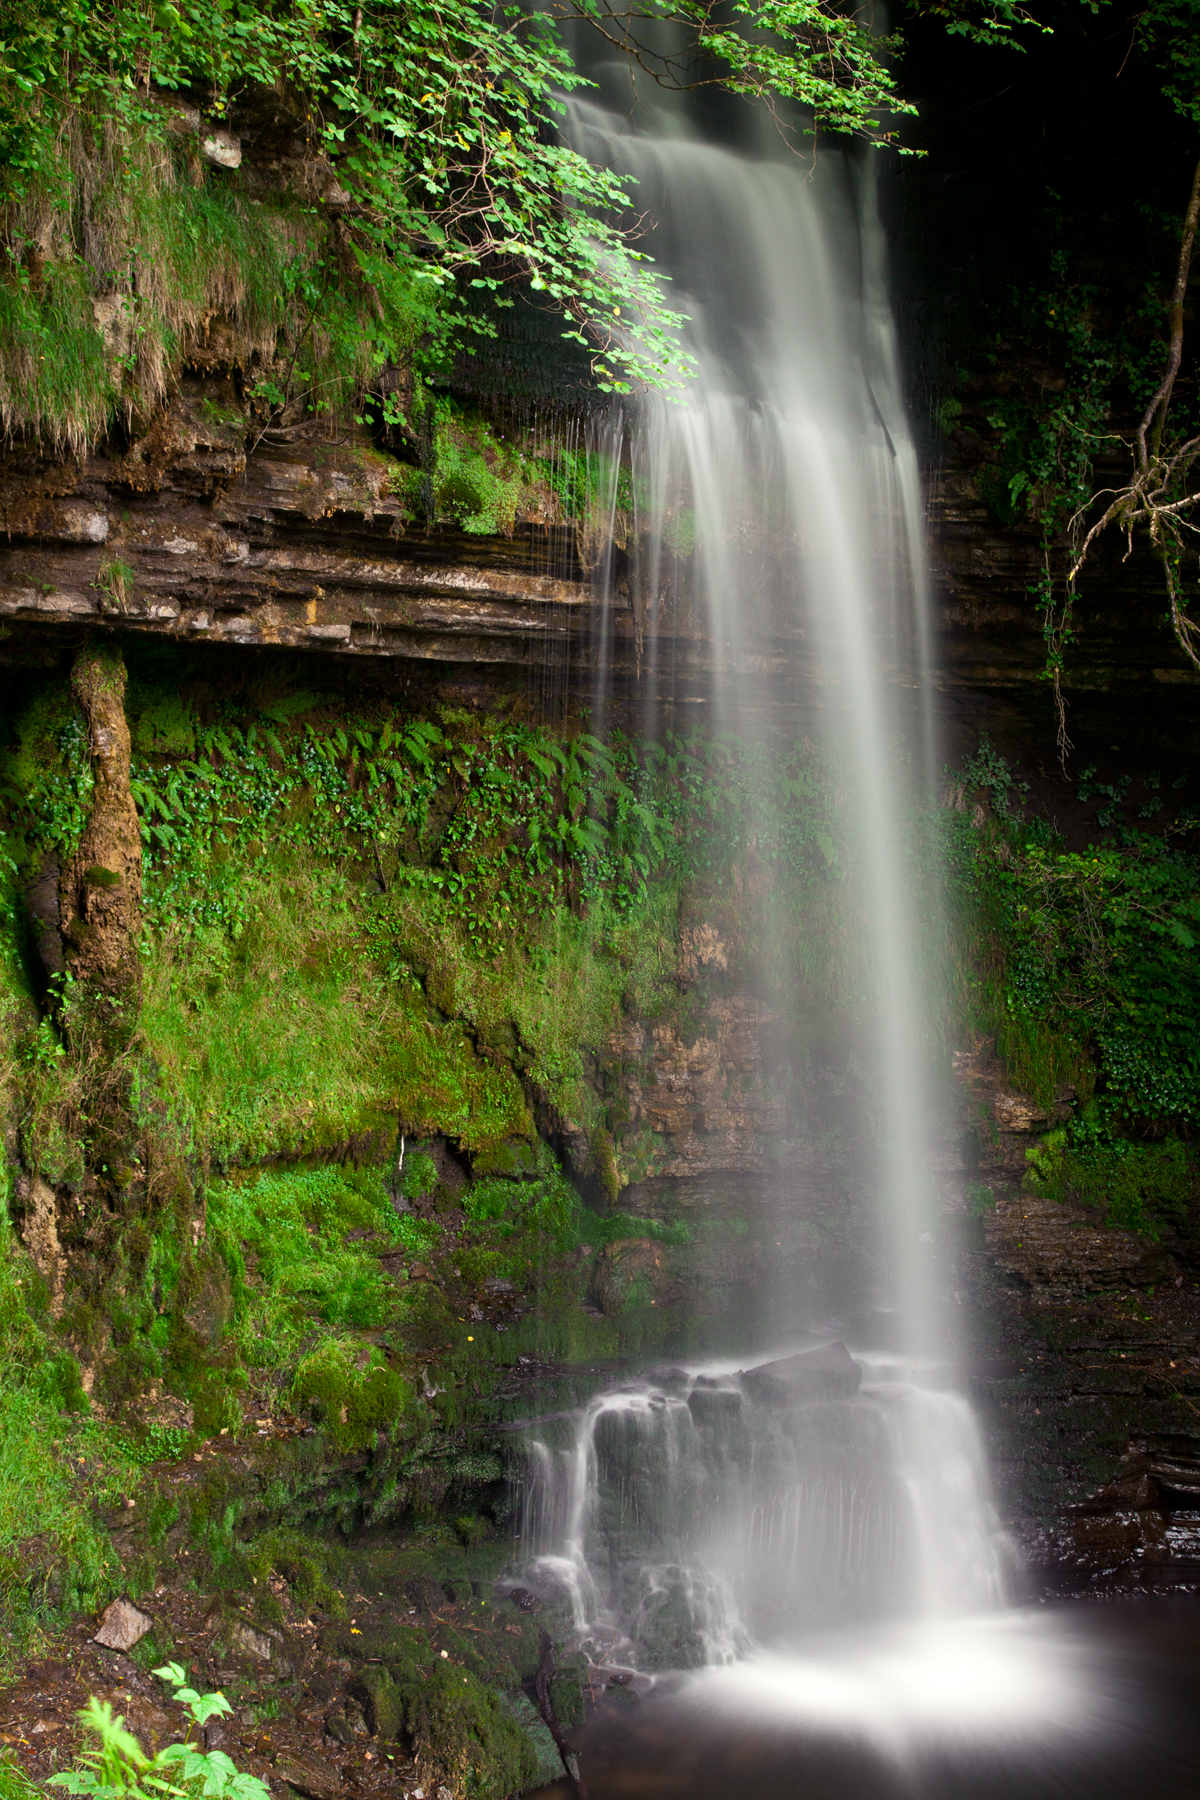 Glencar falls photo